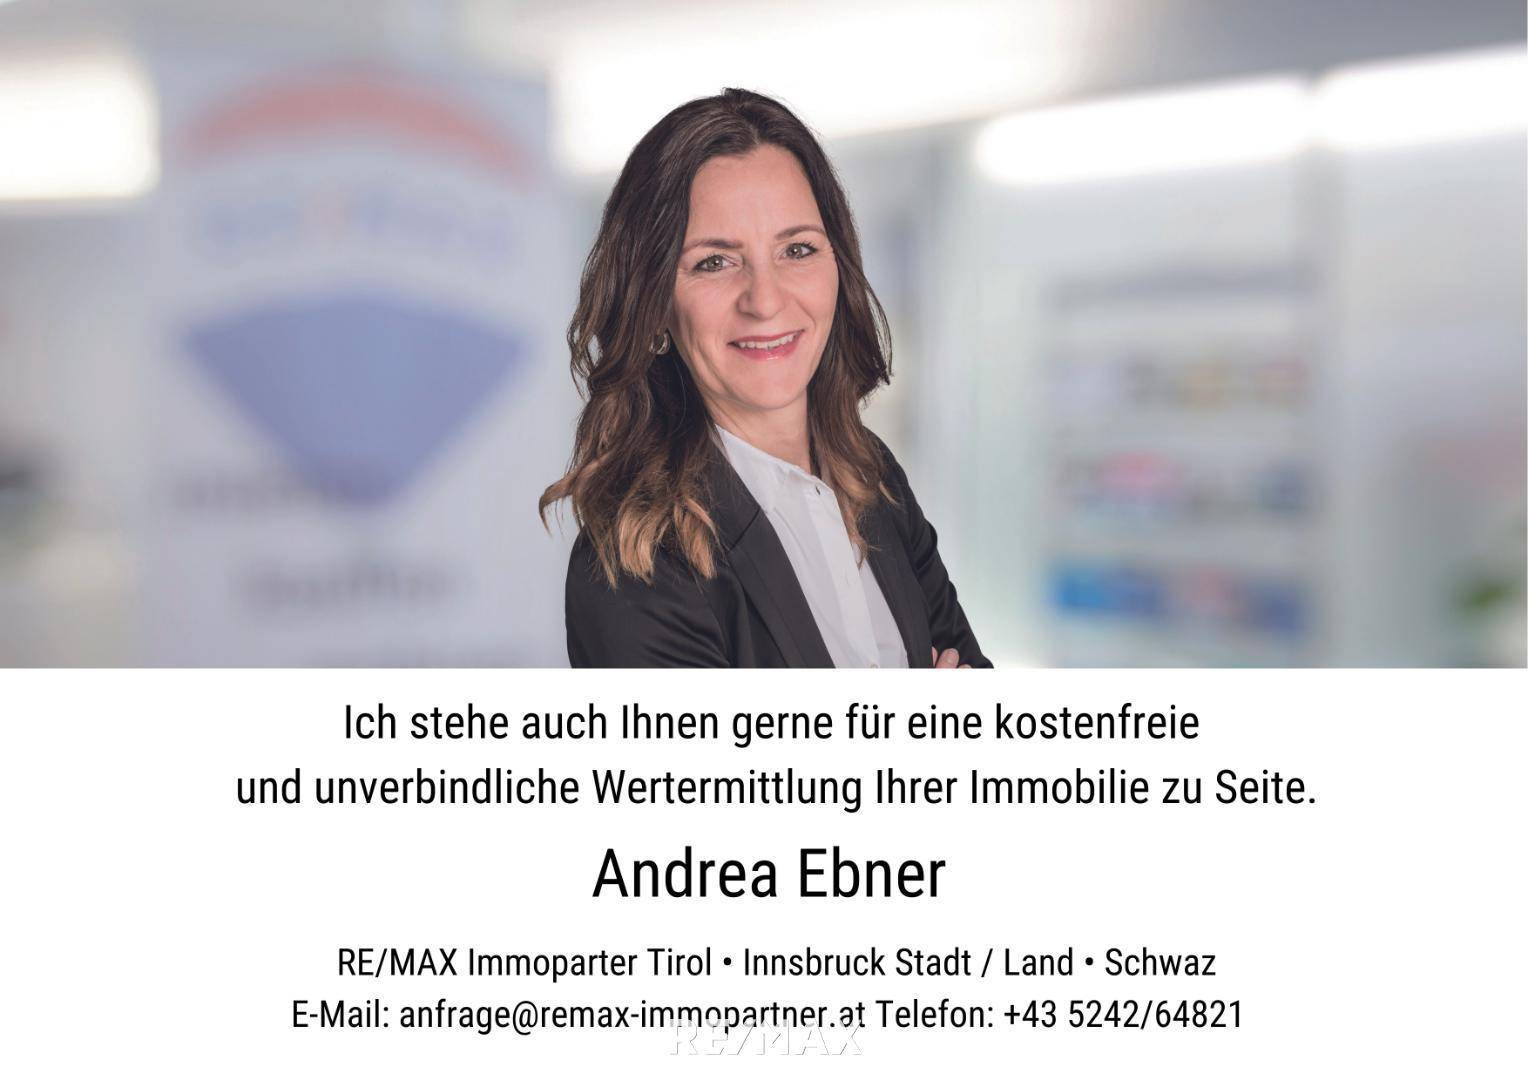 #Andrea Ebner